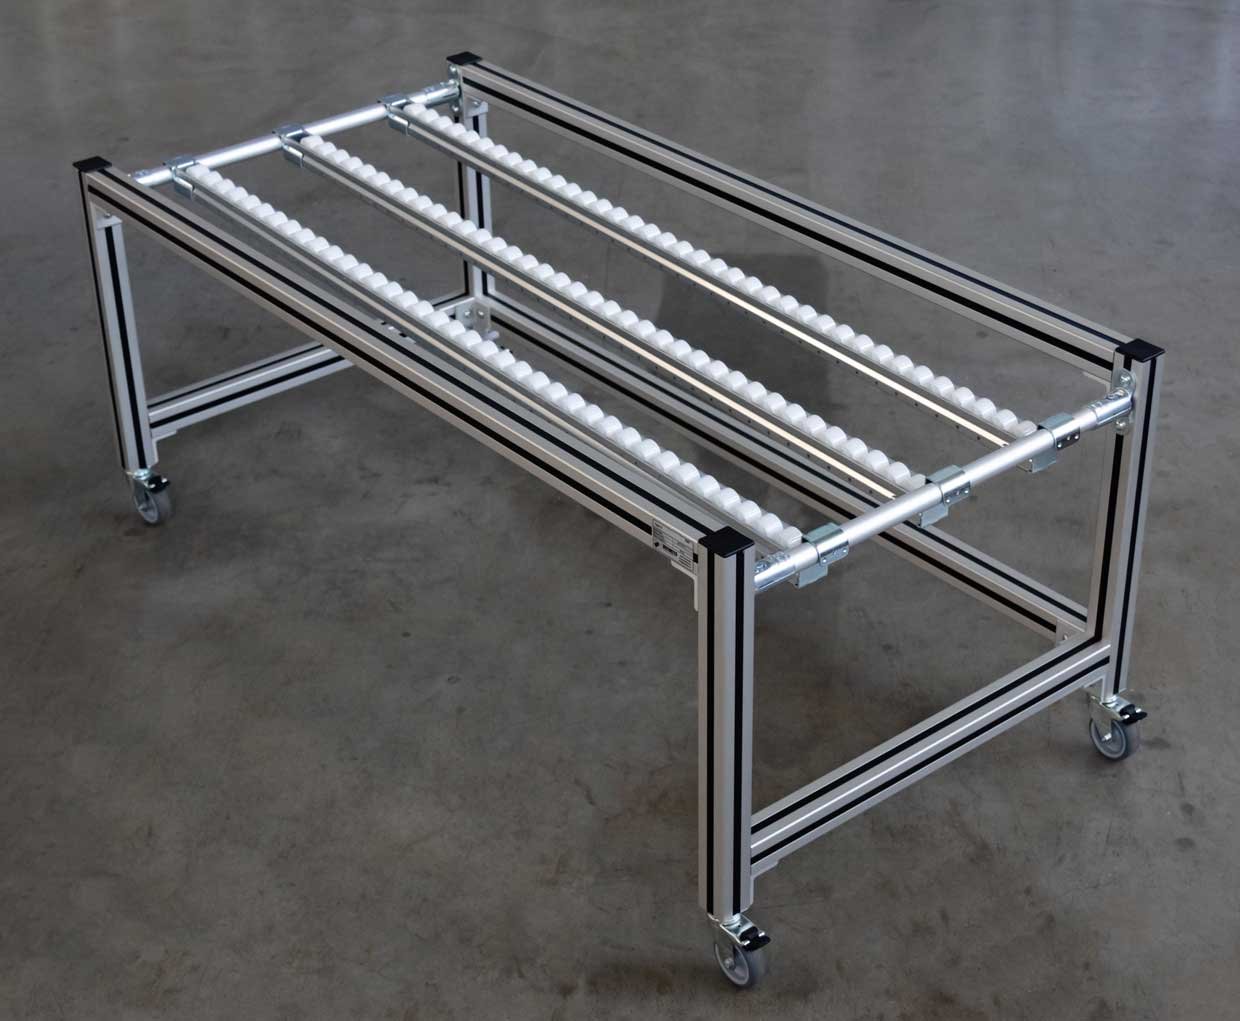 20X20 Aluminium Profile Frame for Adjustable Shelving Units - China  Building Material, Aluminum Profile